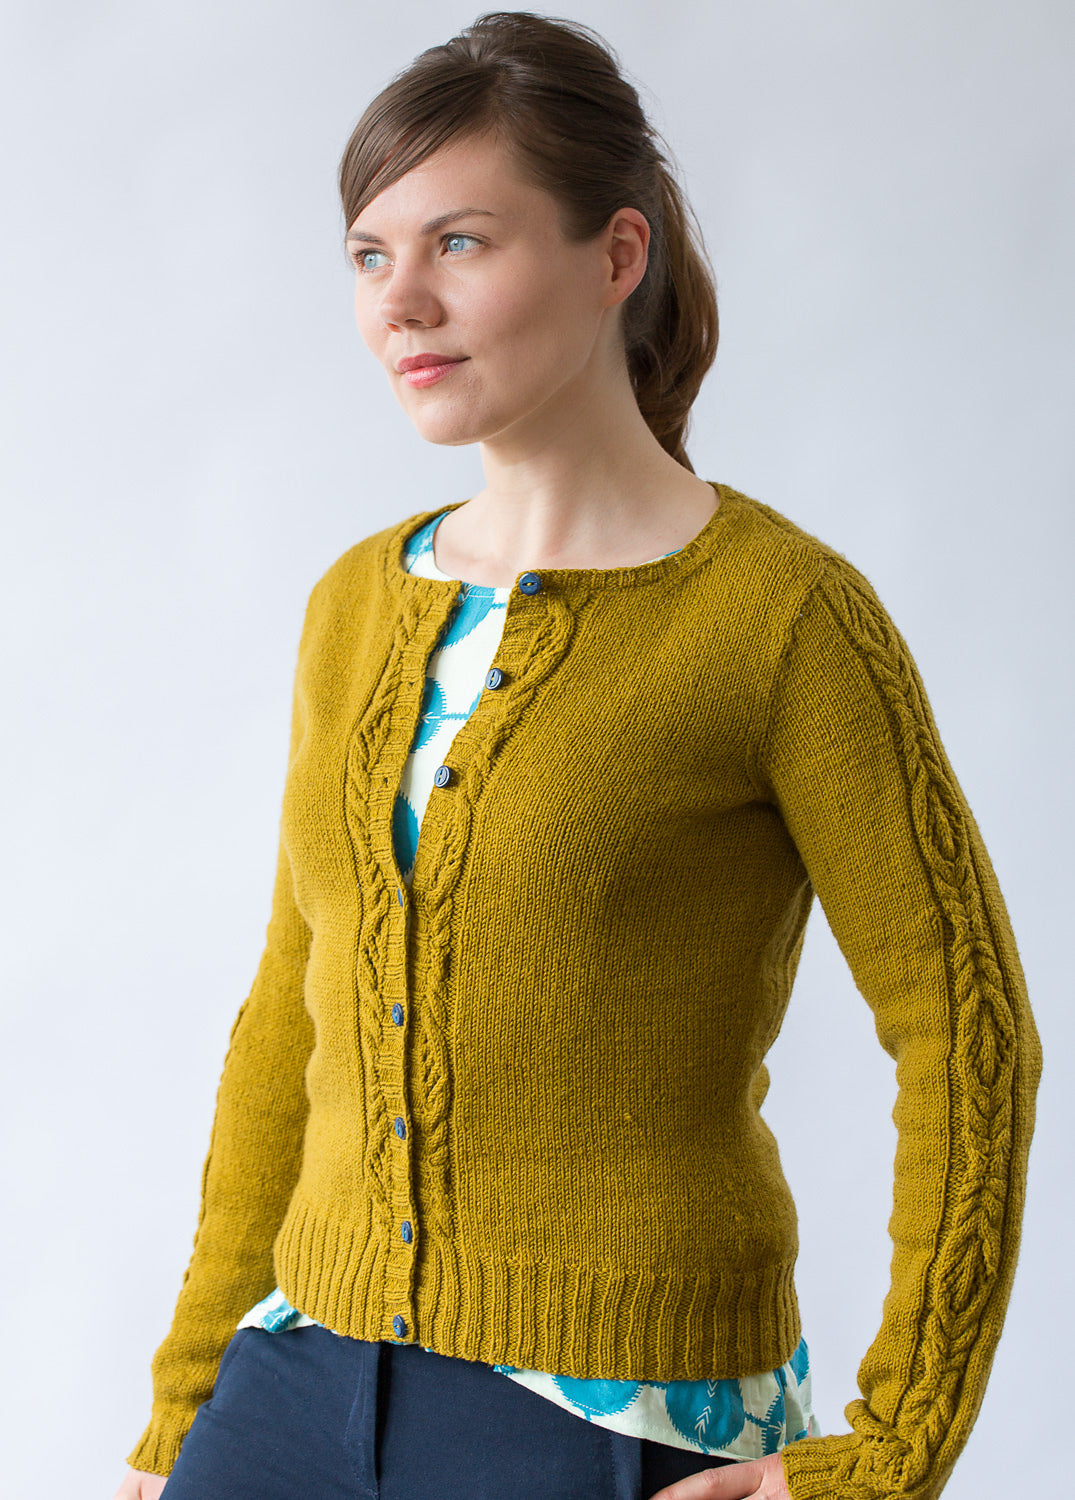 A knitting cardigan pattern, two possibilities, Ishnana by Ysolda Teague